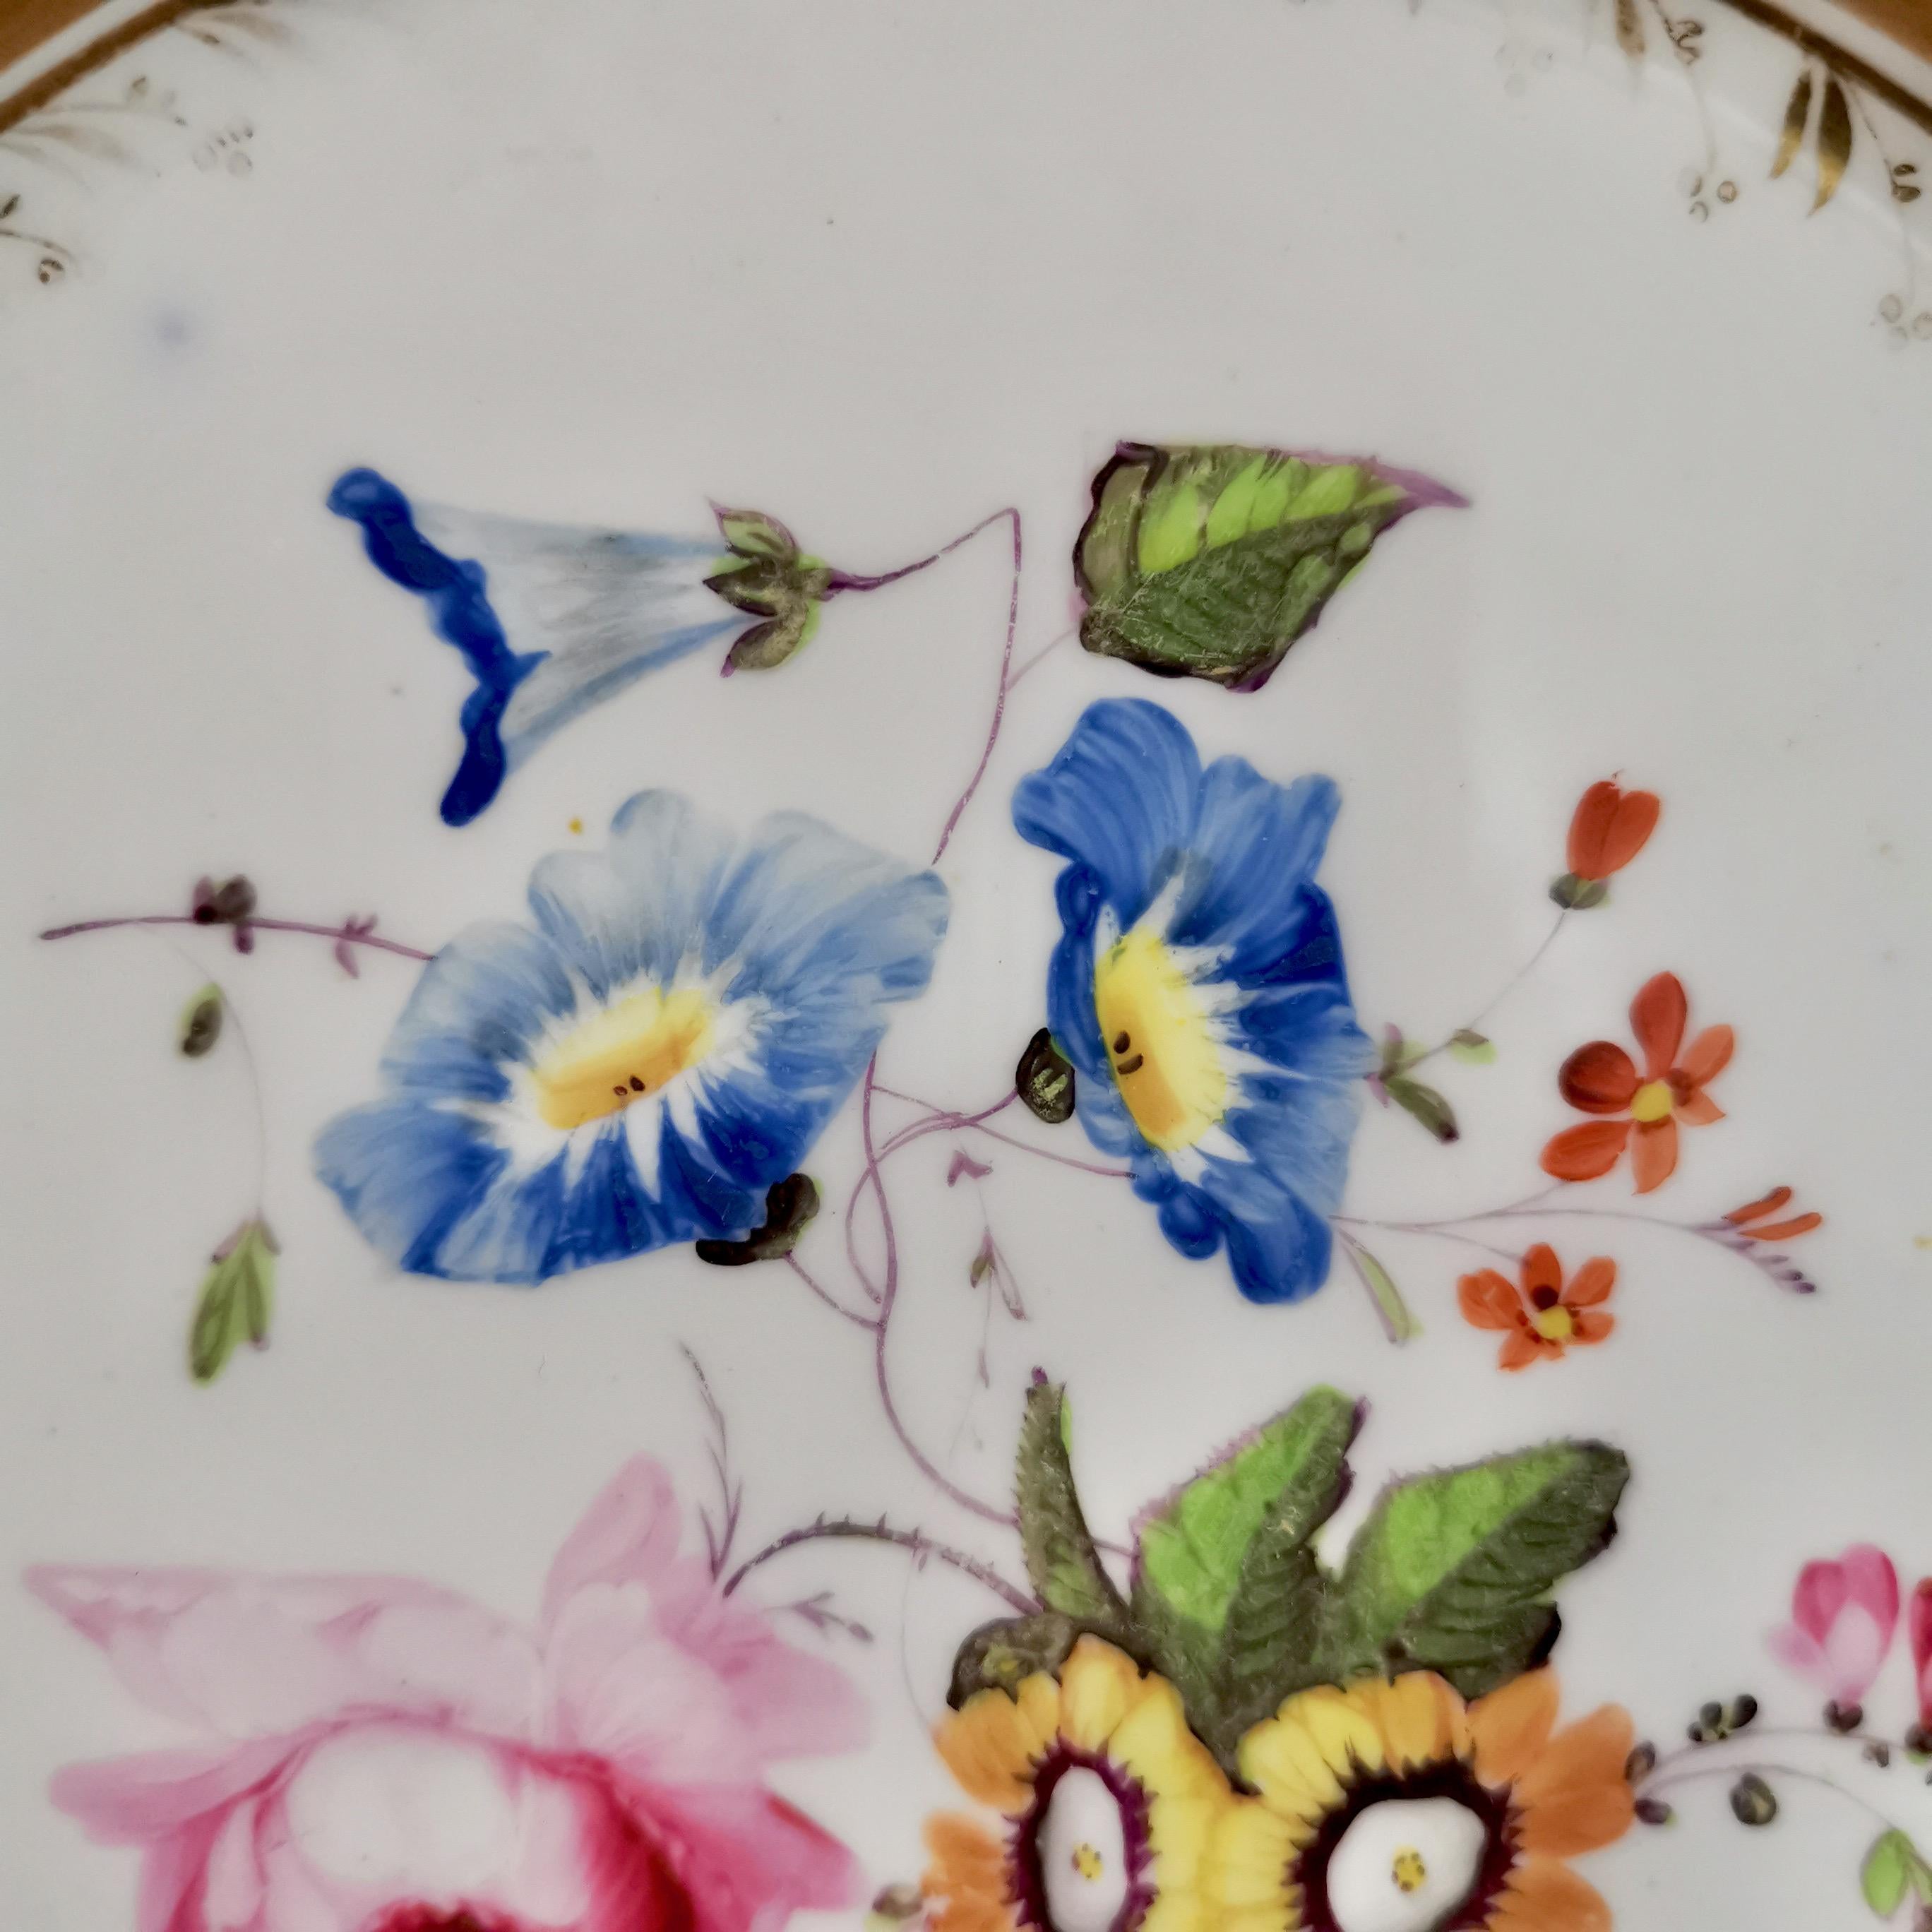 Early 19th Century Samuel Alcock Porcelain Plate, Flowers on Duck Egg Blue, Regency, circa 1820